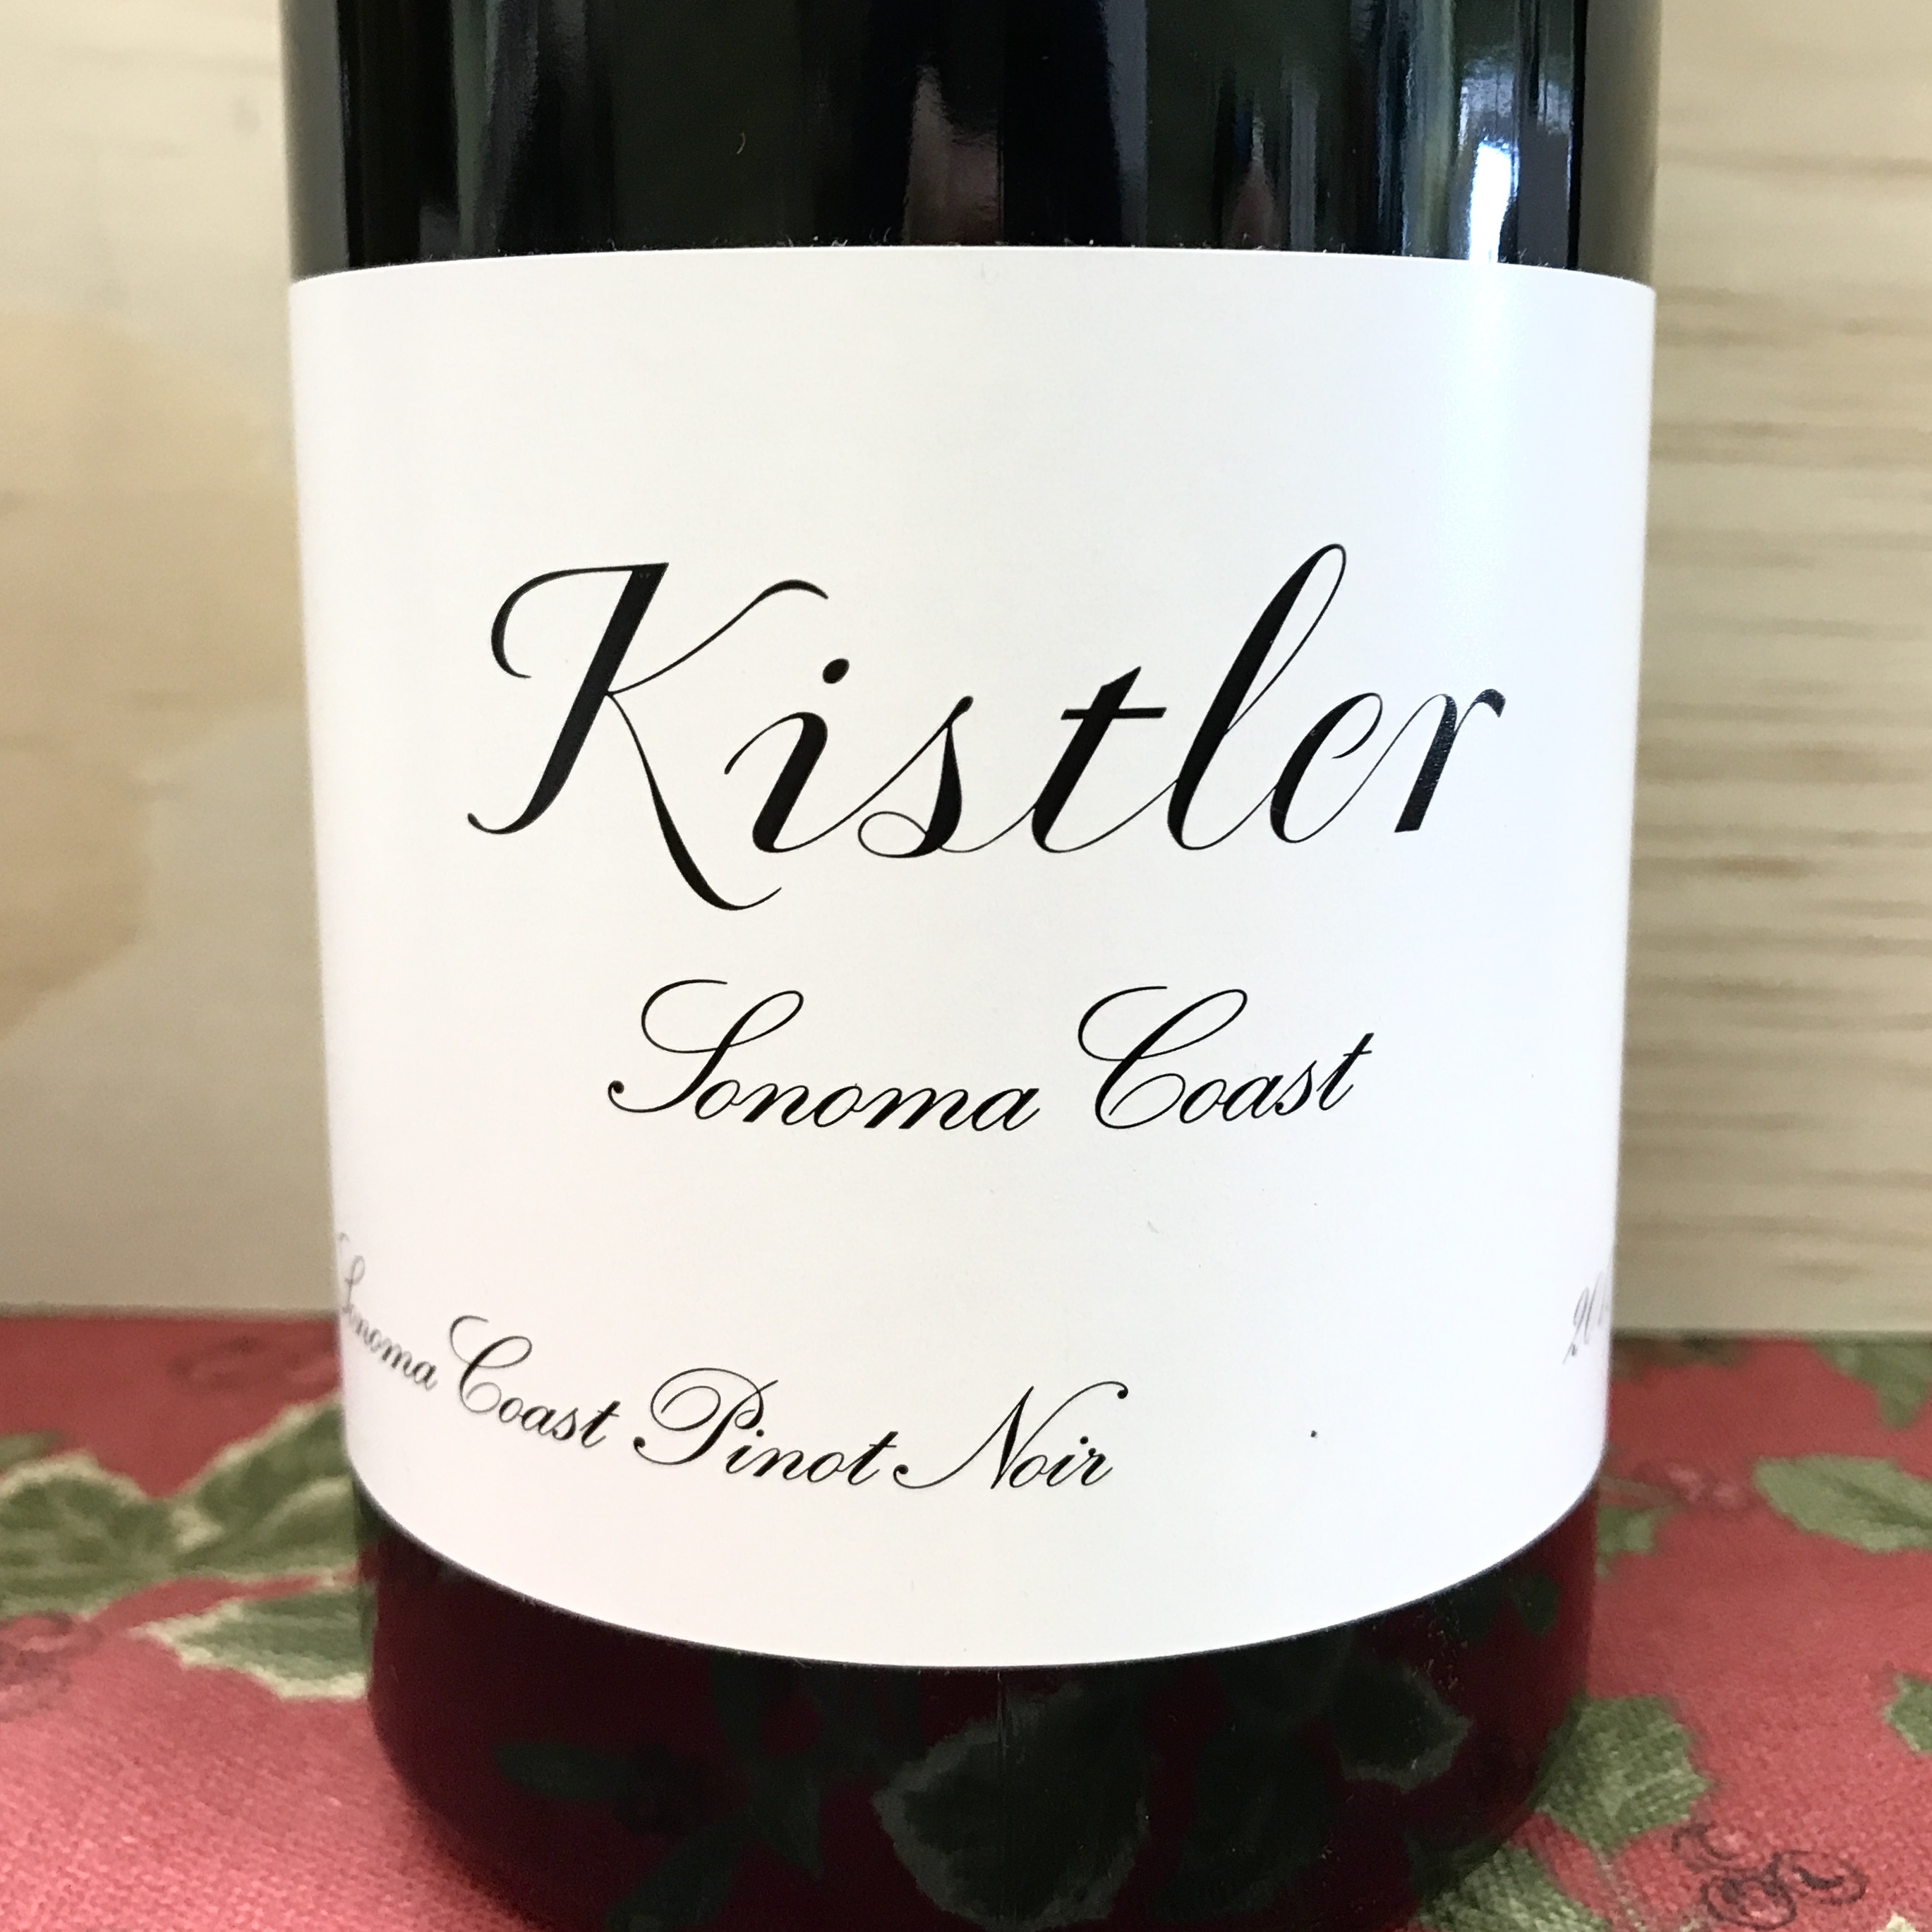 Kistler Sonoma Coast Pinot Noir 2017